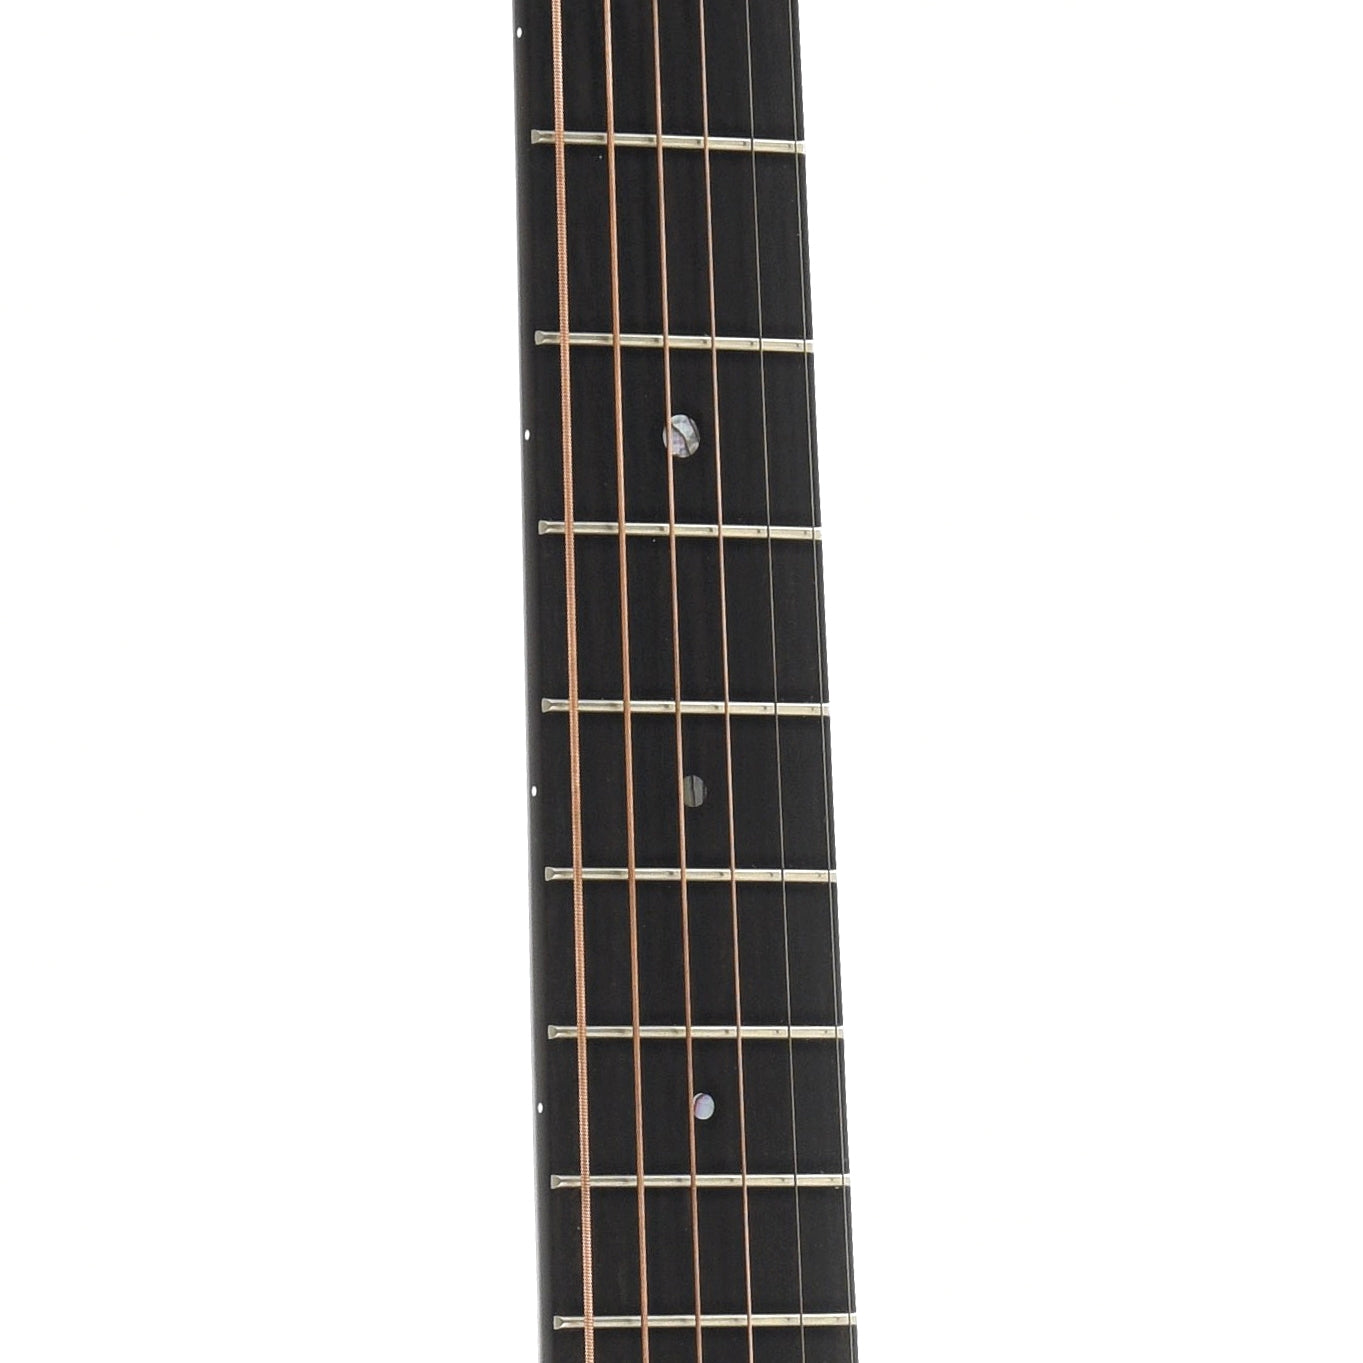 Fretboard of Martin 00-18 Guitar